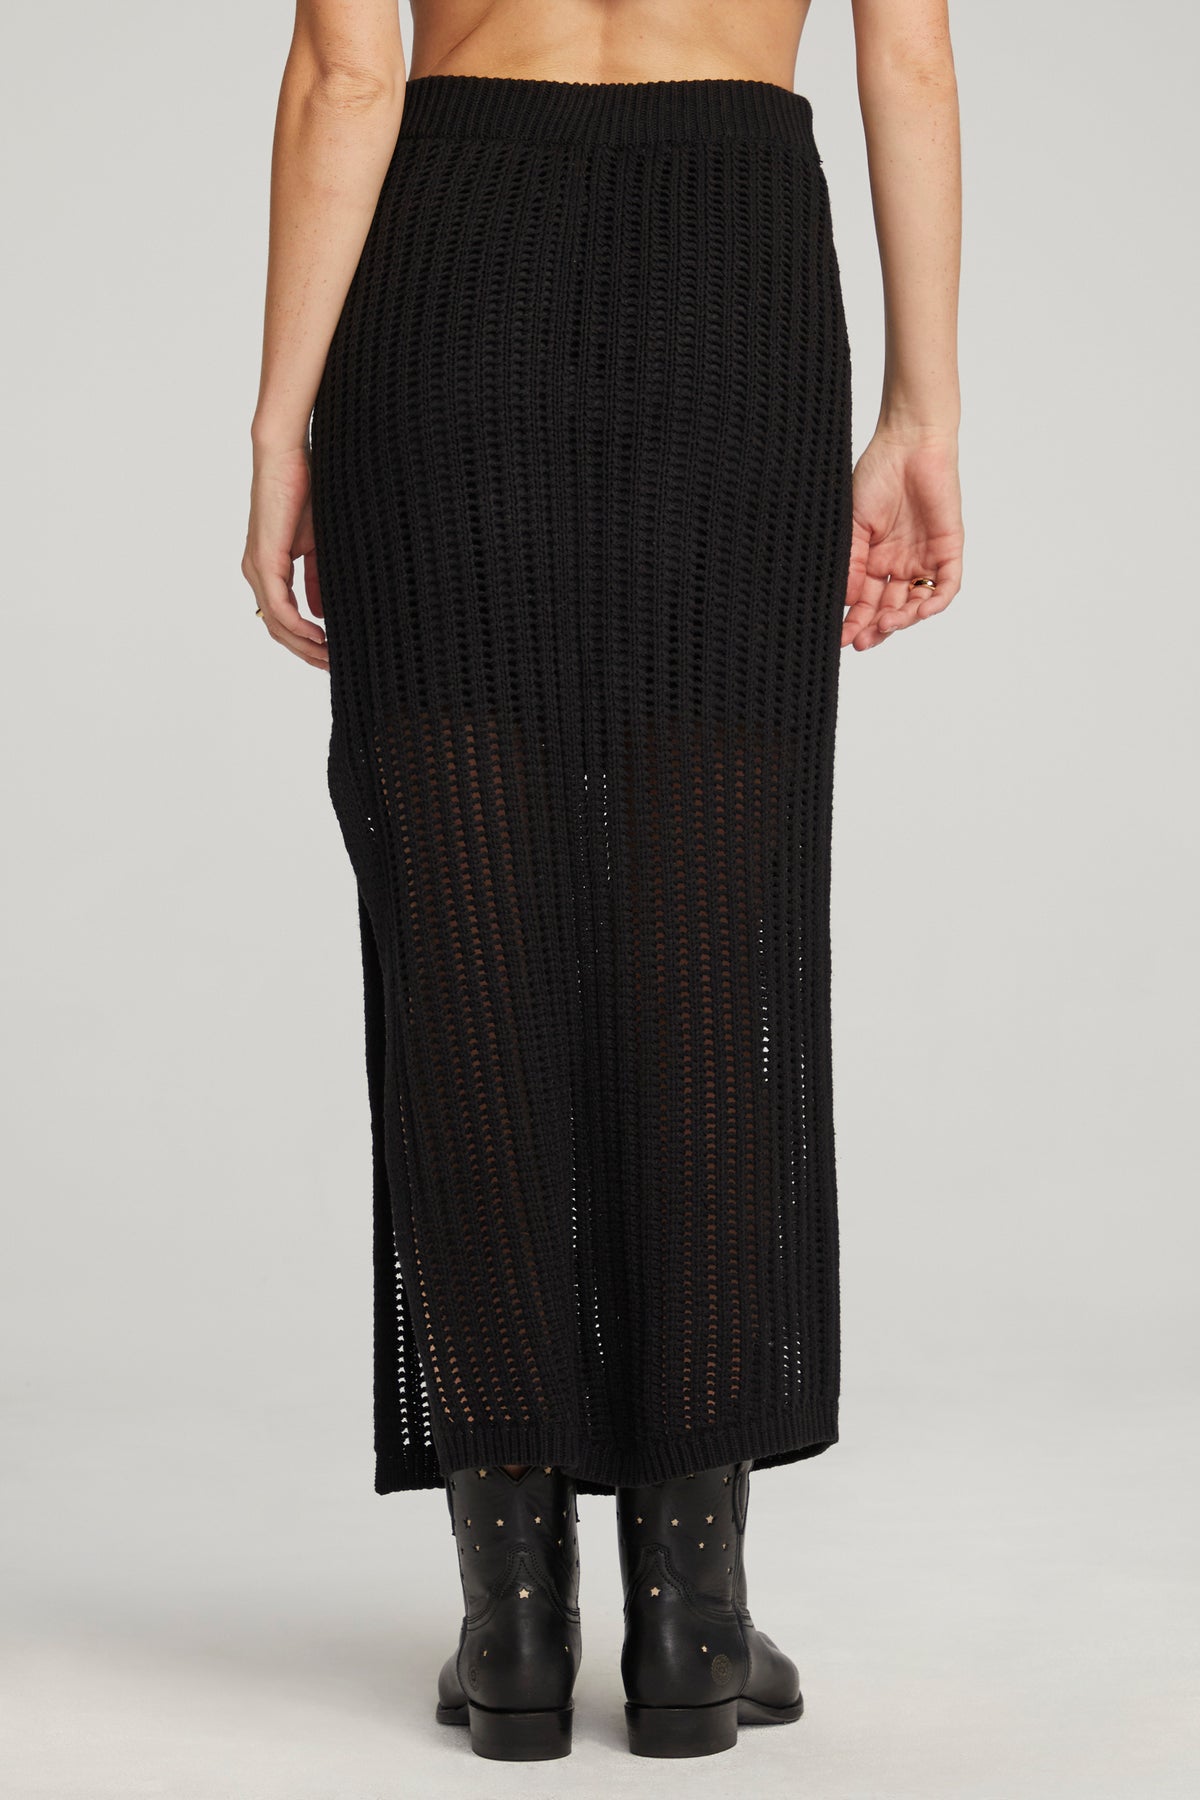 Saltwater Luxe Suzi Midi Skirt - Size M Available